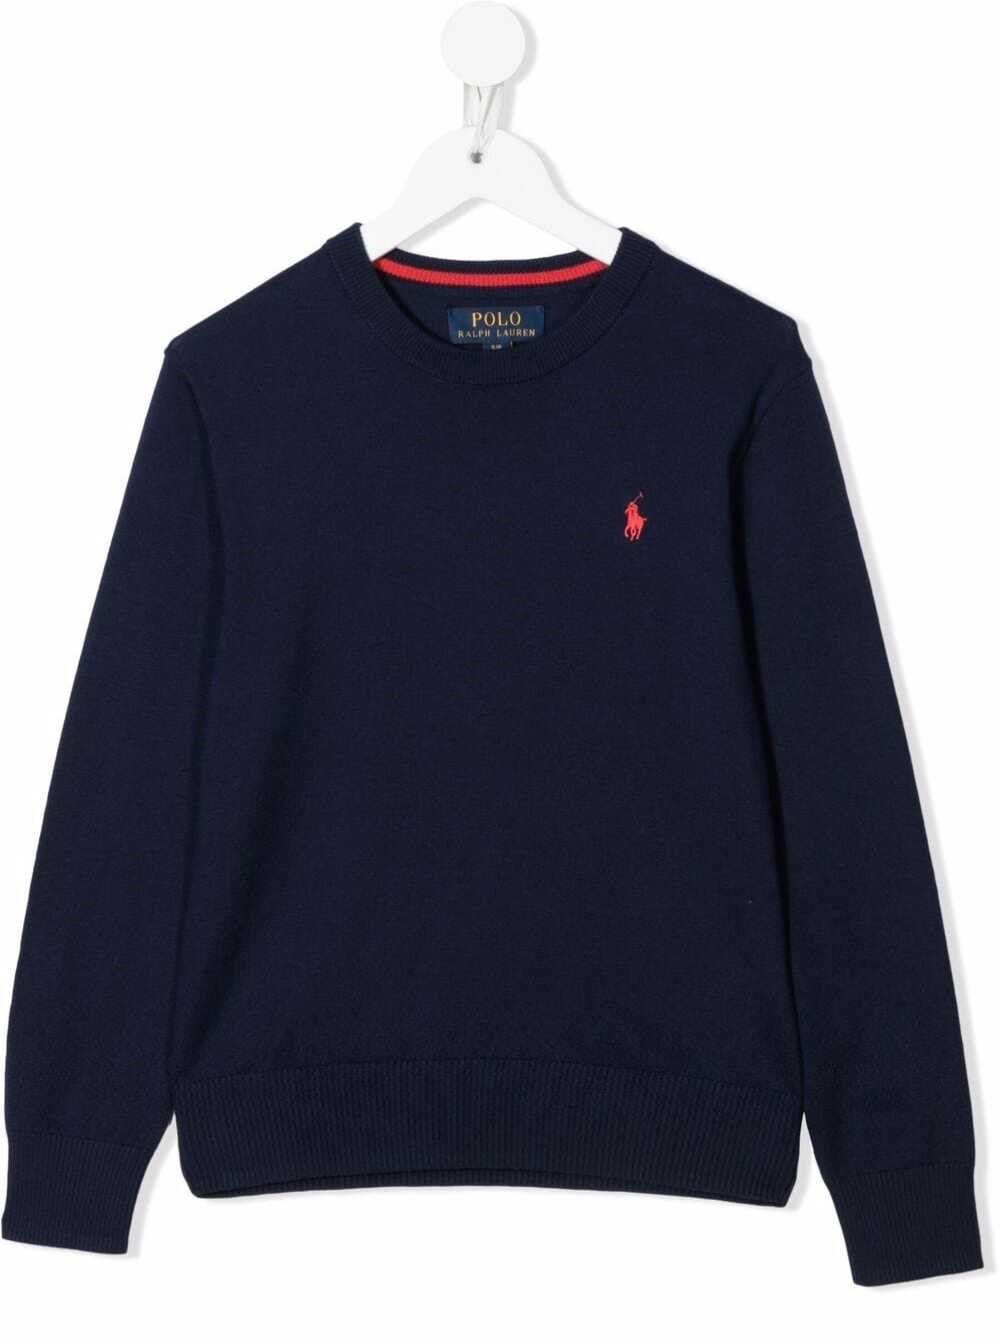 Polo Ralph Lauren Kids Boy's Blue Cotton Sweater with Logo Blu ...